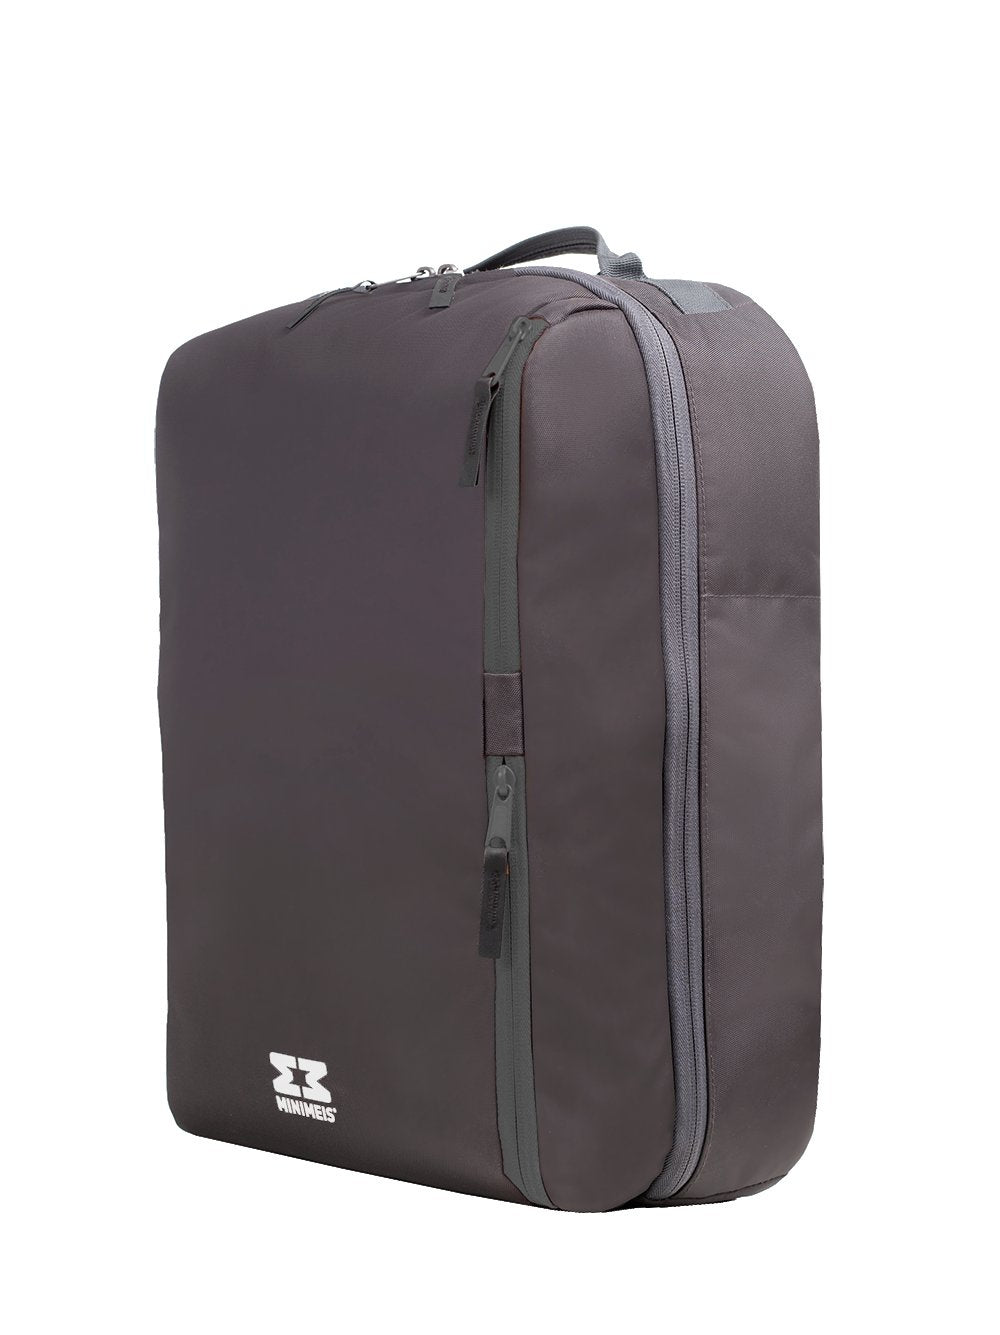 Minimeis - backpack - Dark Gray